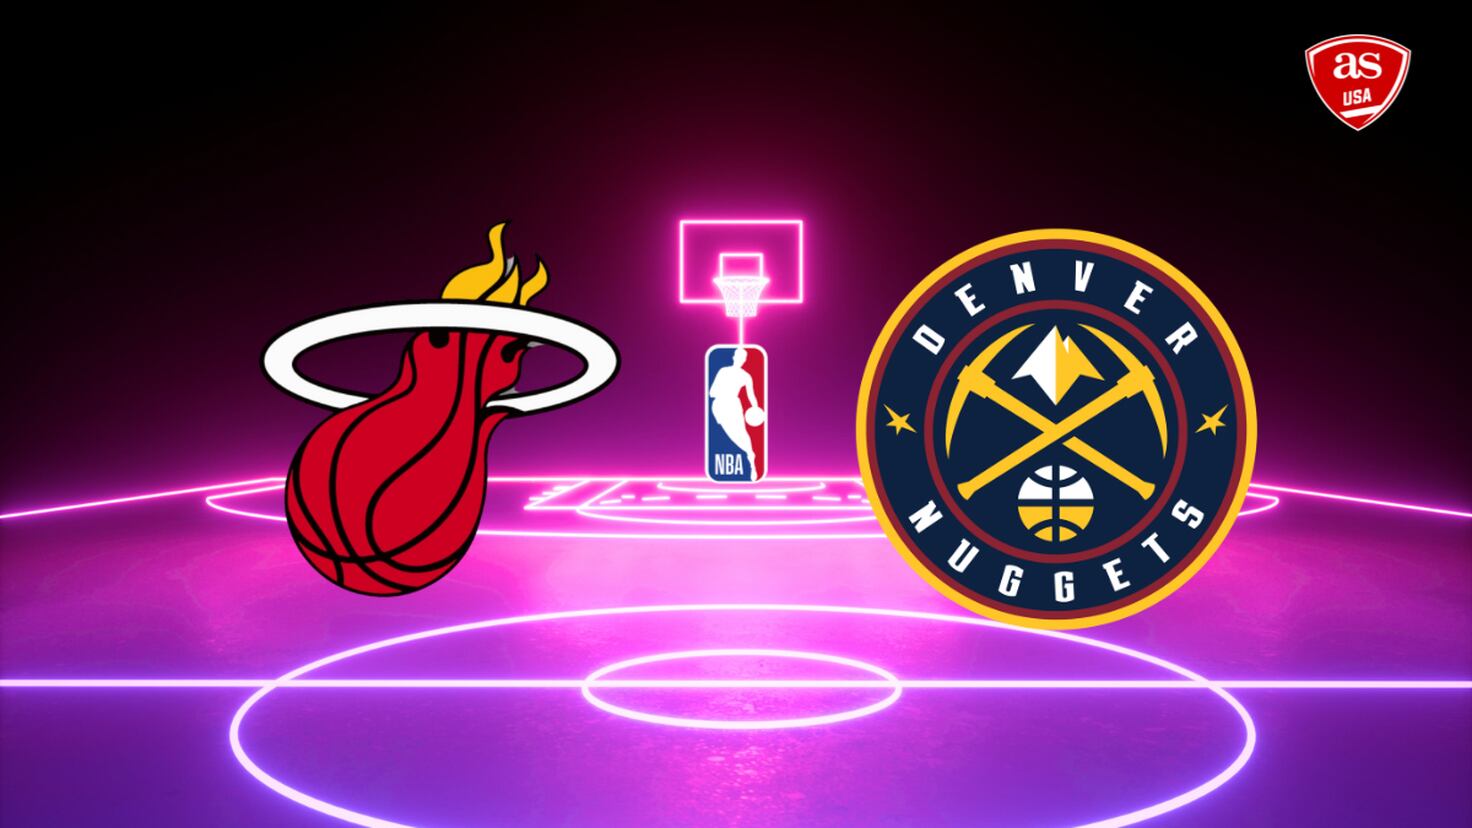 Miami Heat vs. Denver Nuggets NBA Finals schedule, TV, how to watch